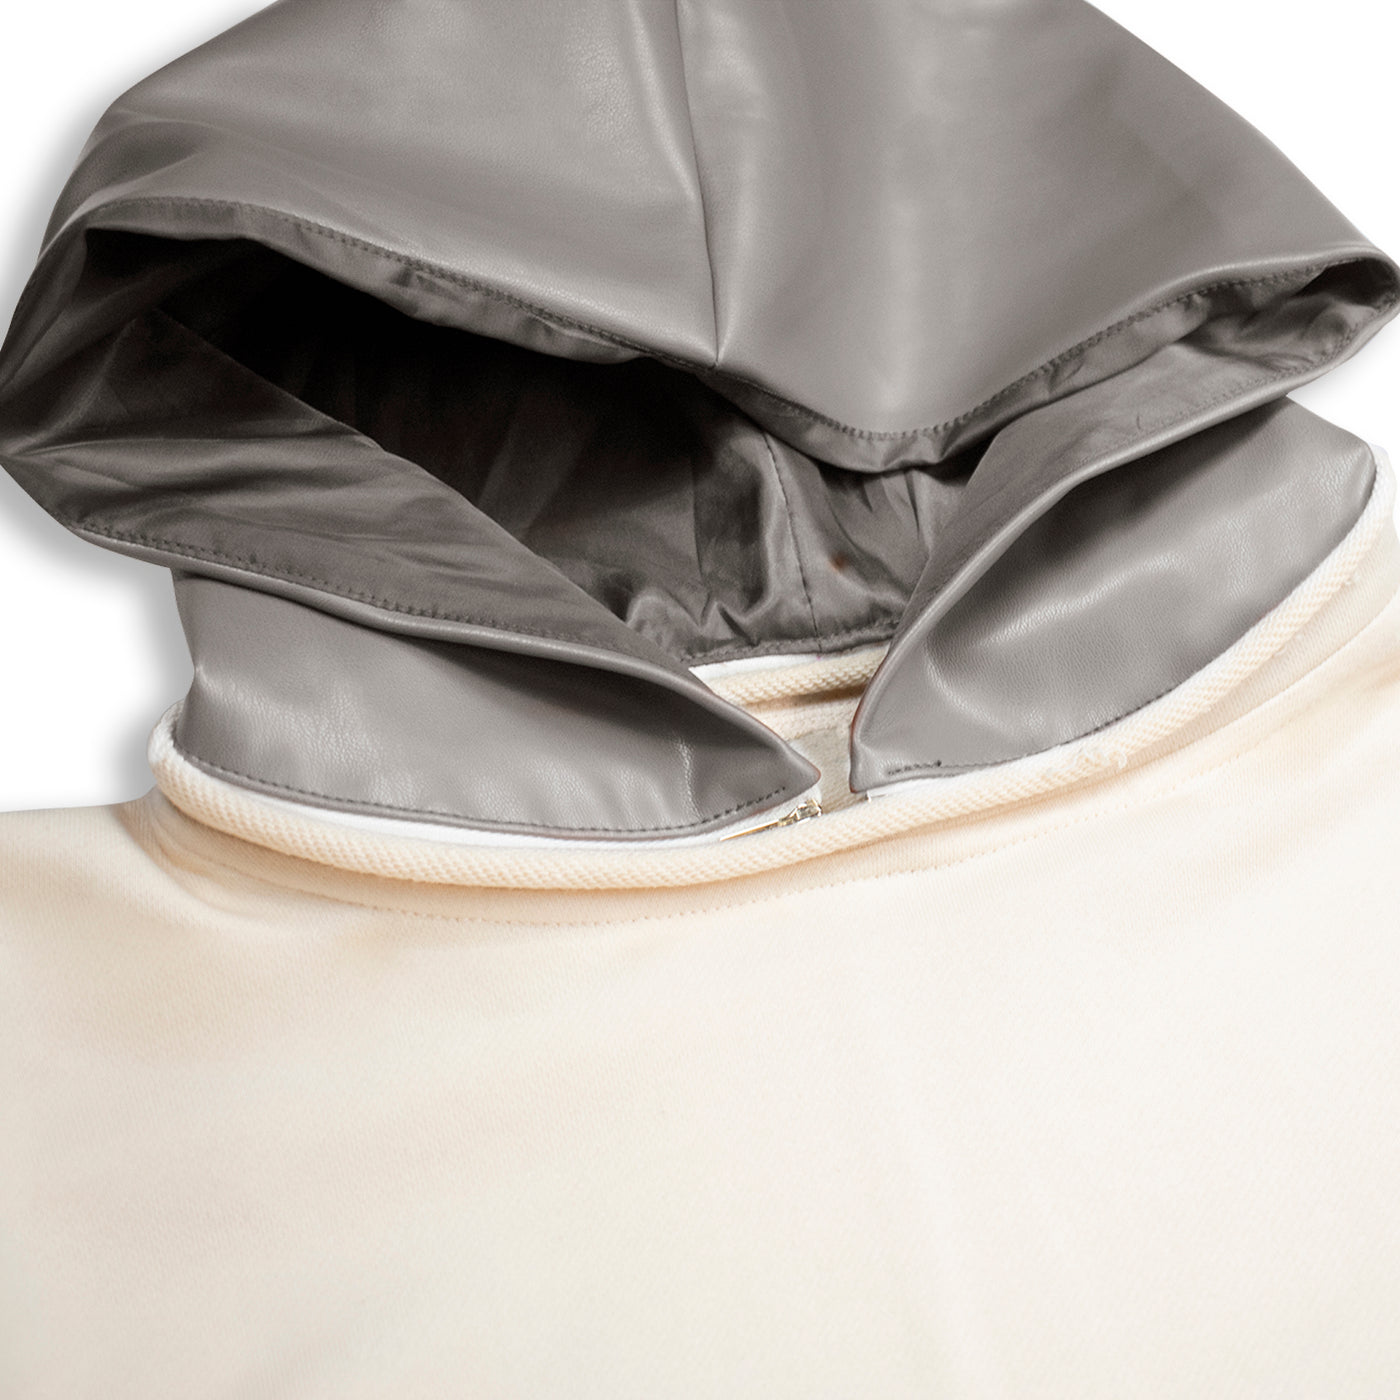 InoFlex Tech™ Faux Leather Detachable Hood - Stone Grey